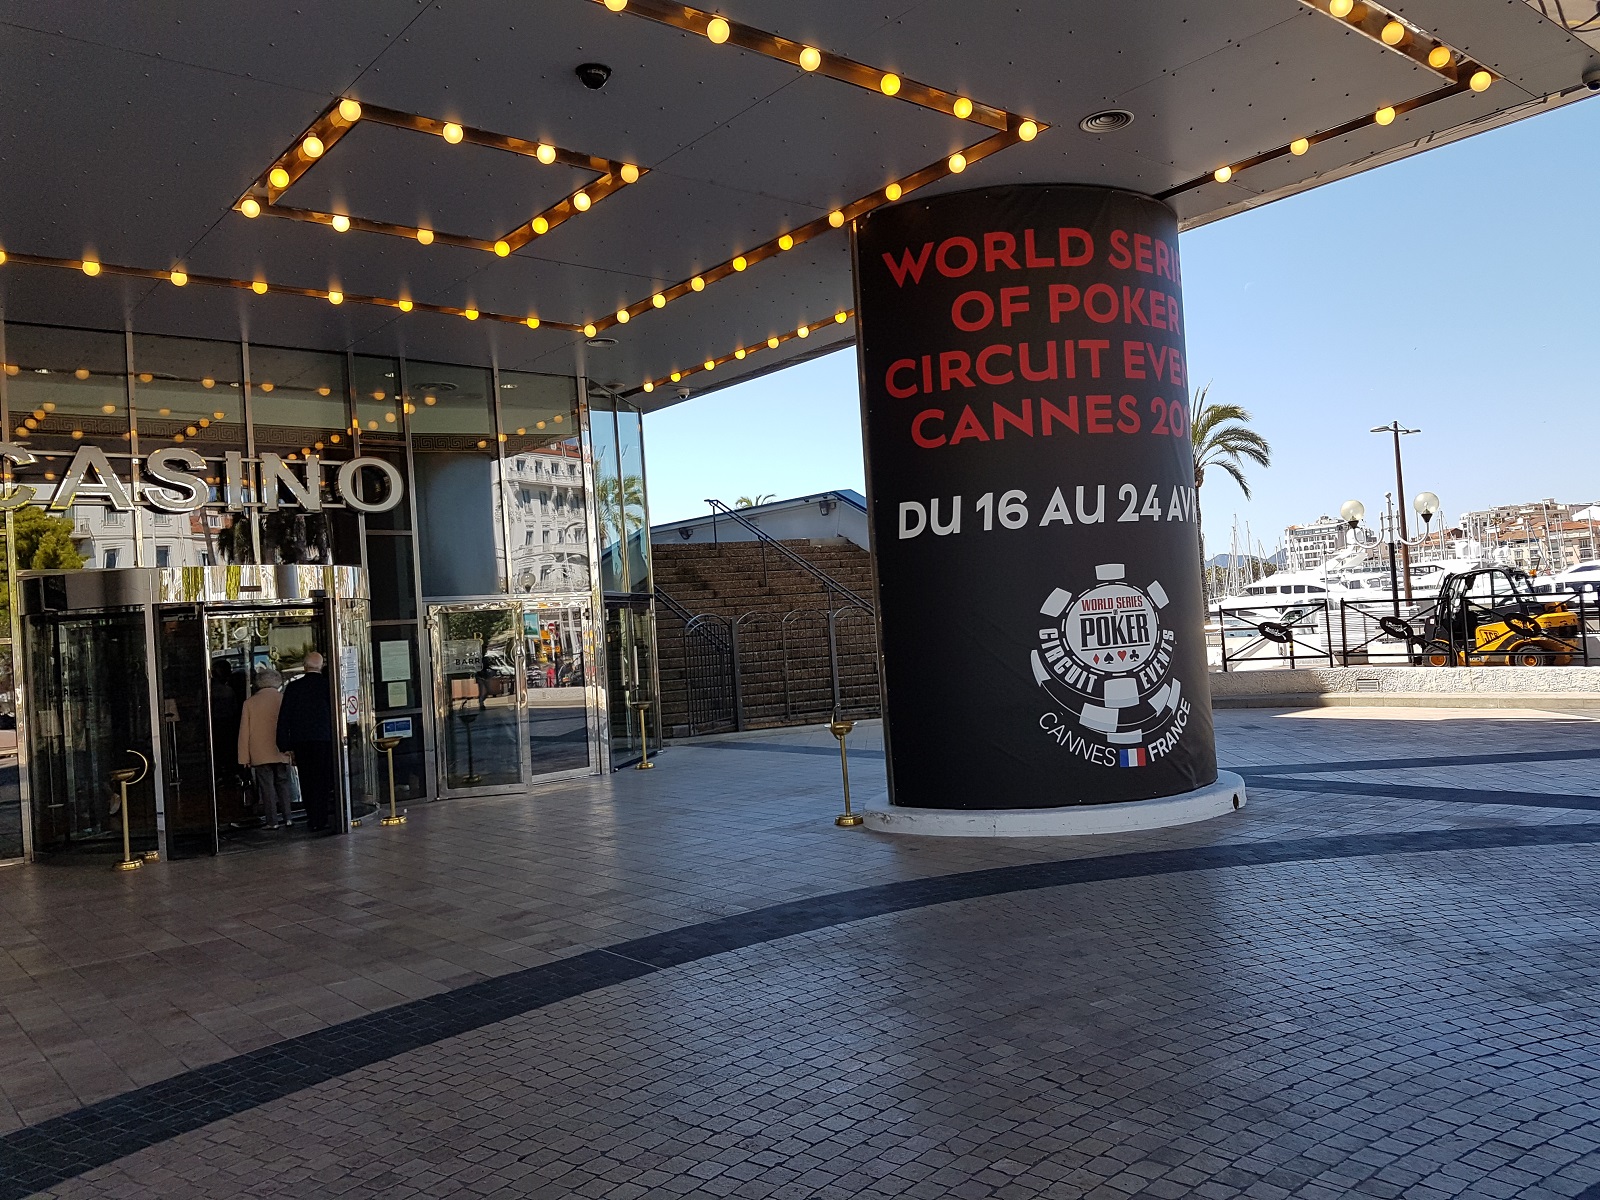 WSOPC CannesDay 1B va y avoir du sport ! Blog Poker de PMU Poker